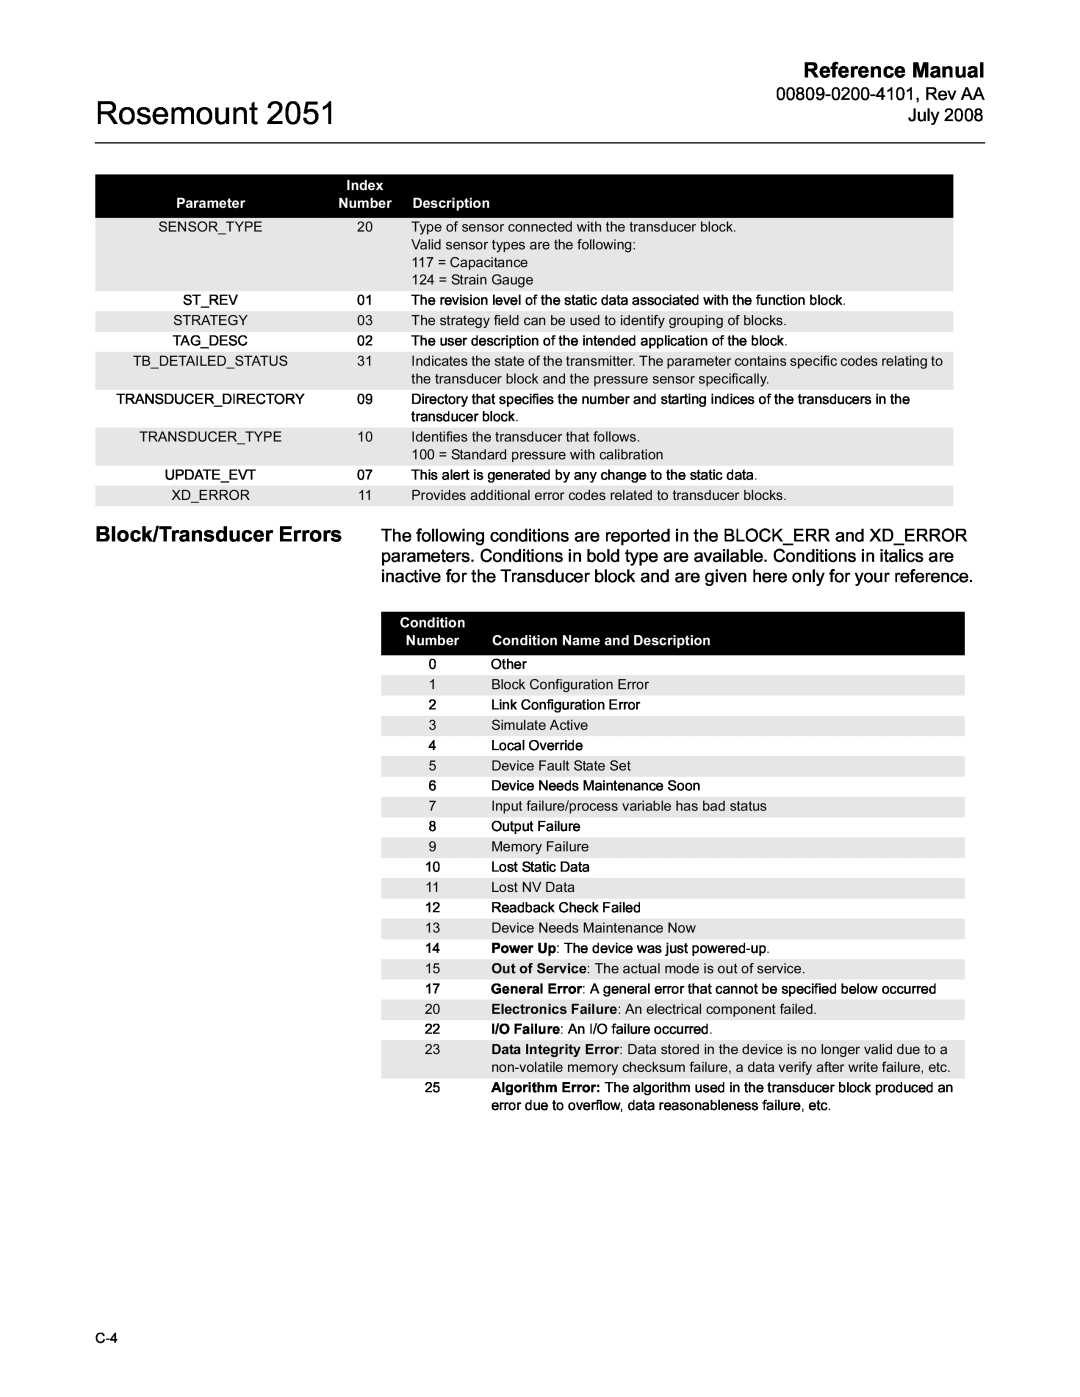 Emerson Process Management 2051 manual Rosemount, Reference Manual, 00809-0200-4101,Rev AA July 